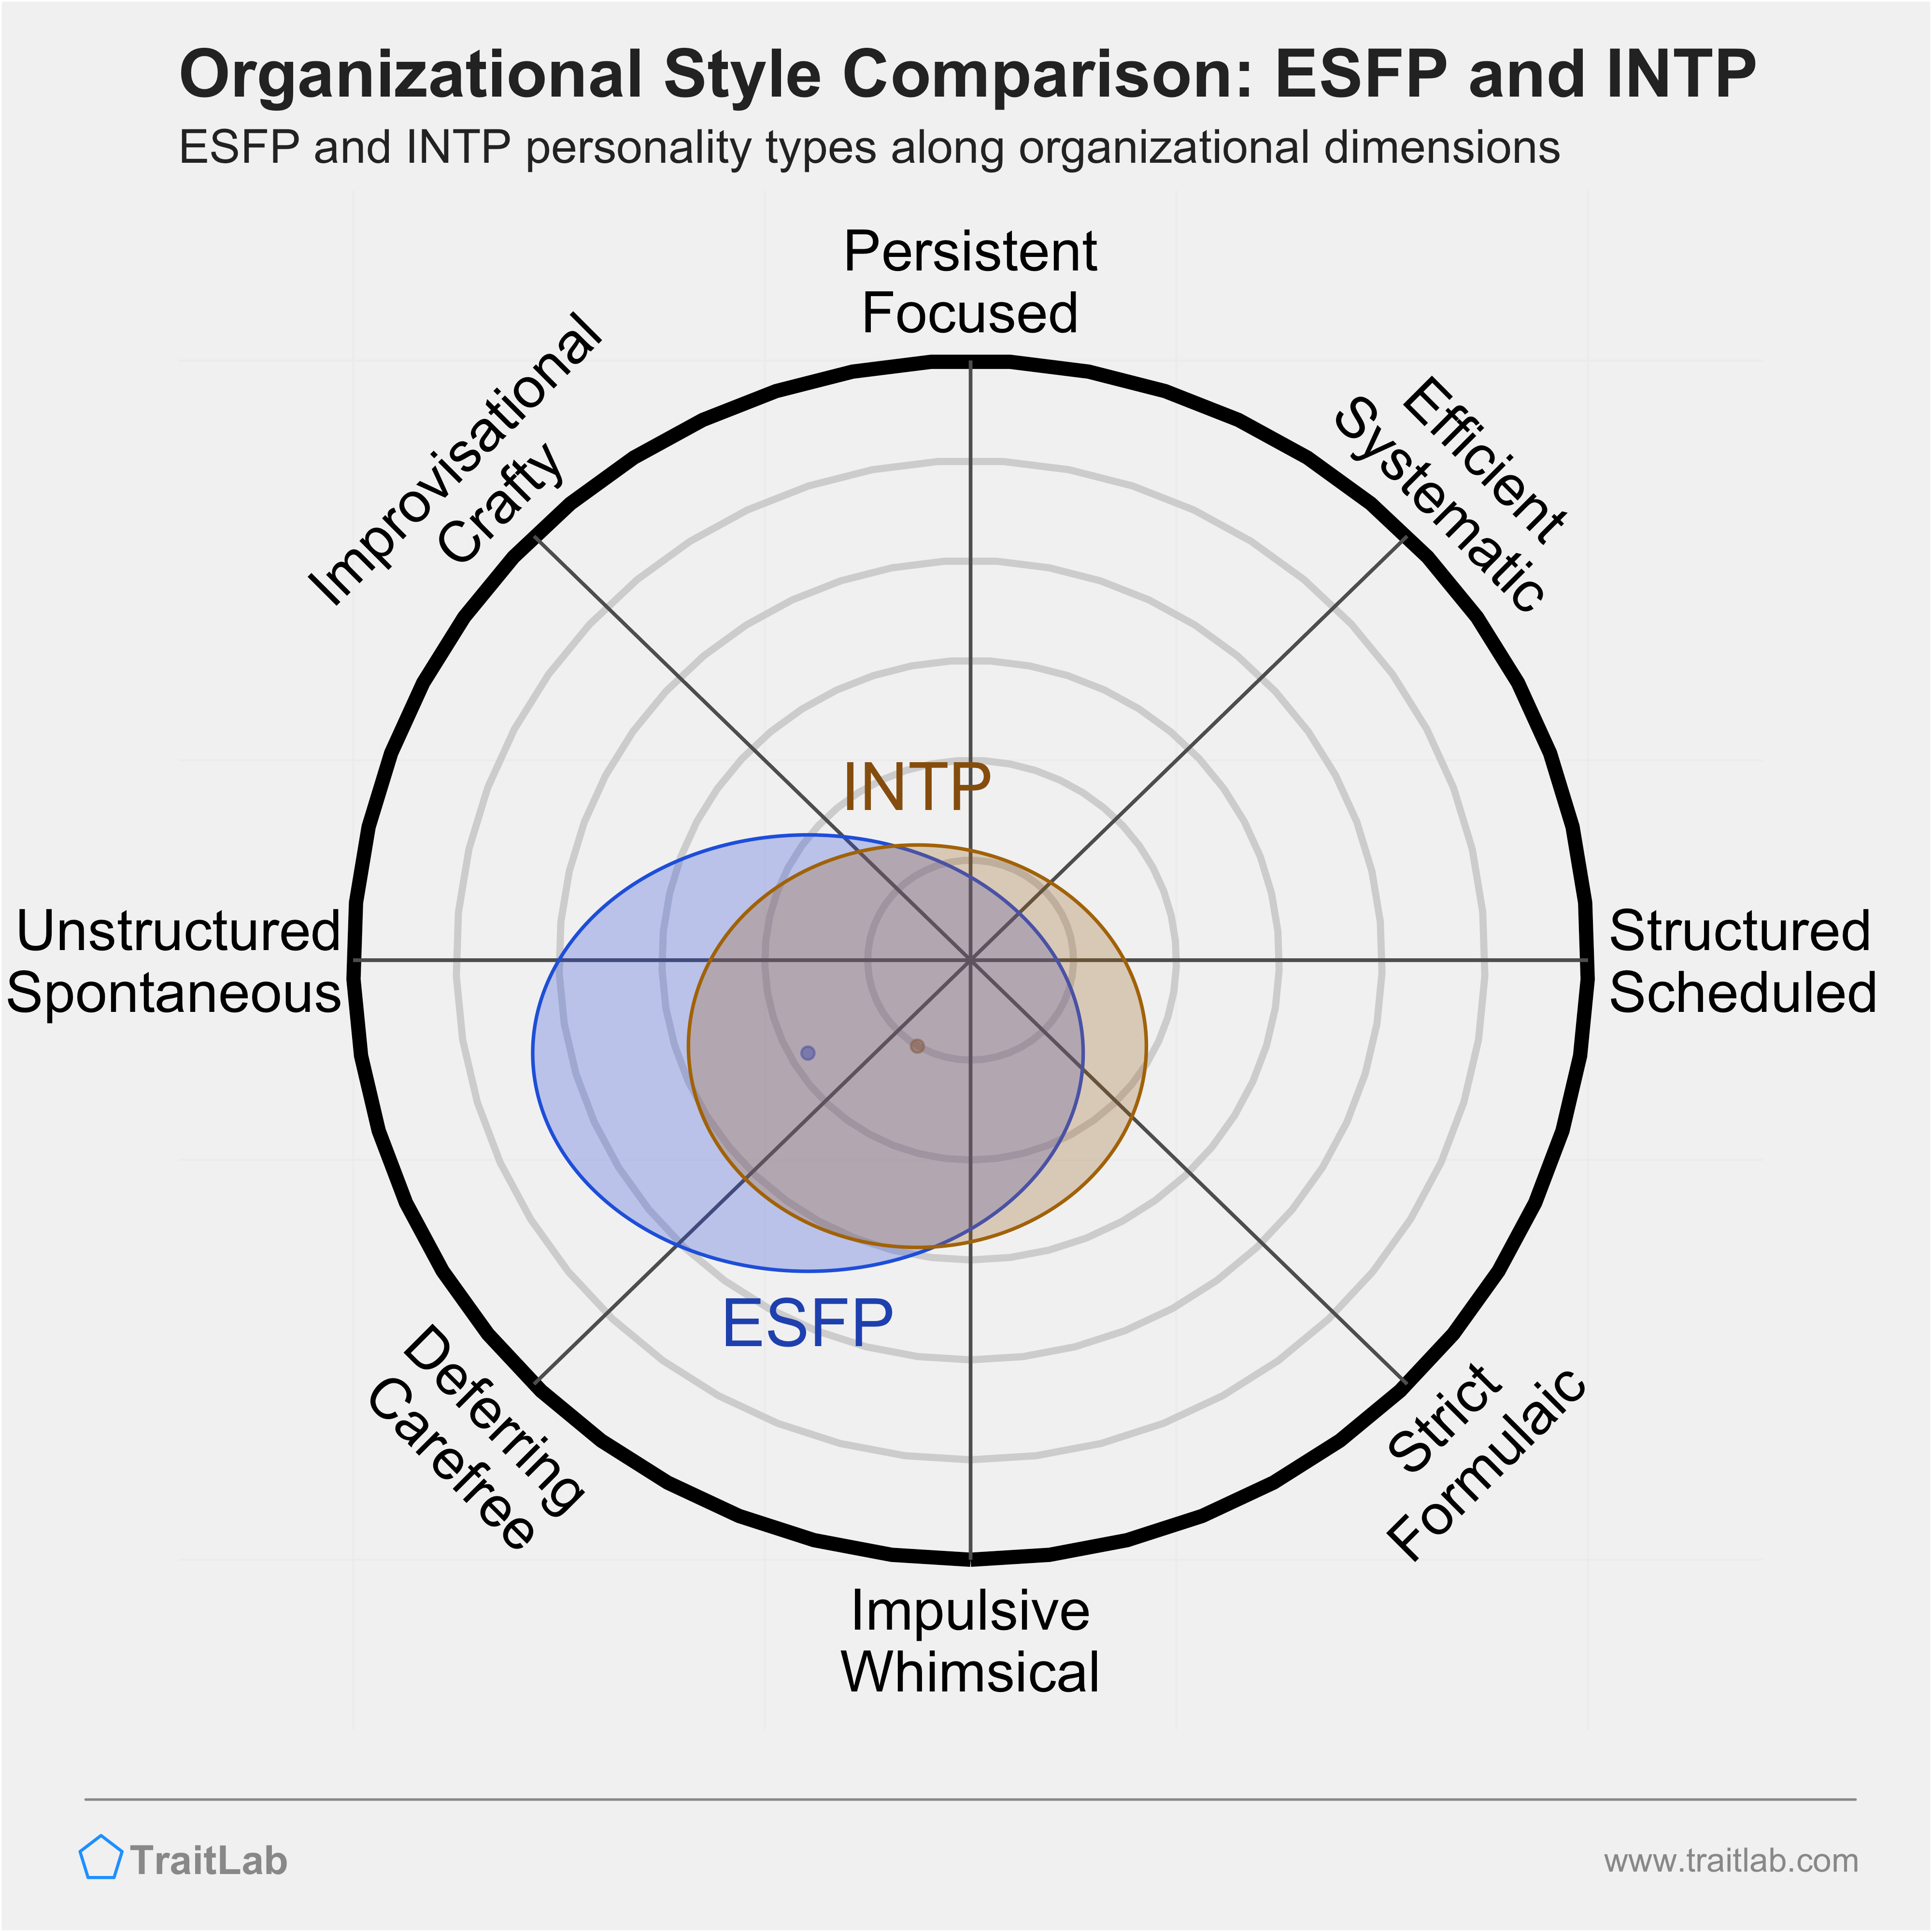 ESFP and INTP comparison across organizational dimensions